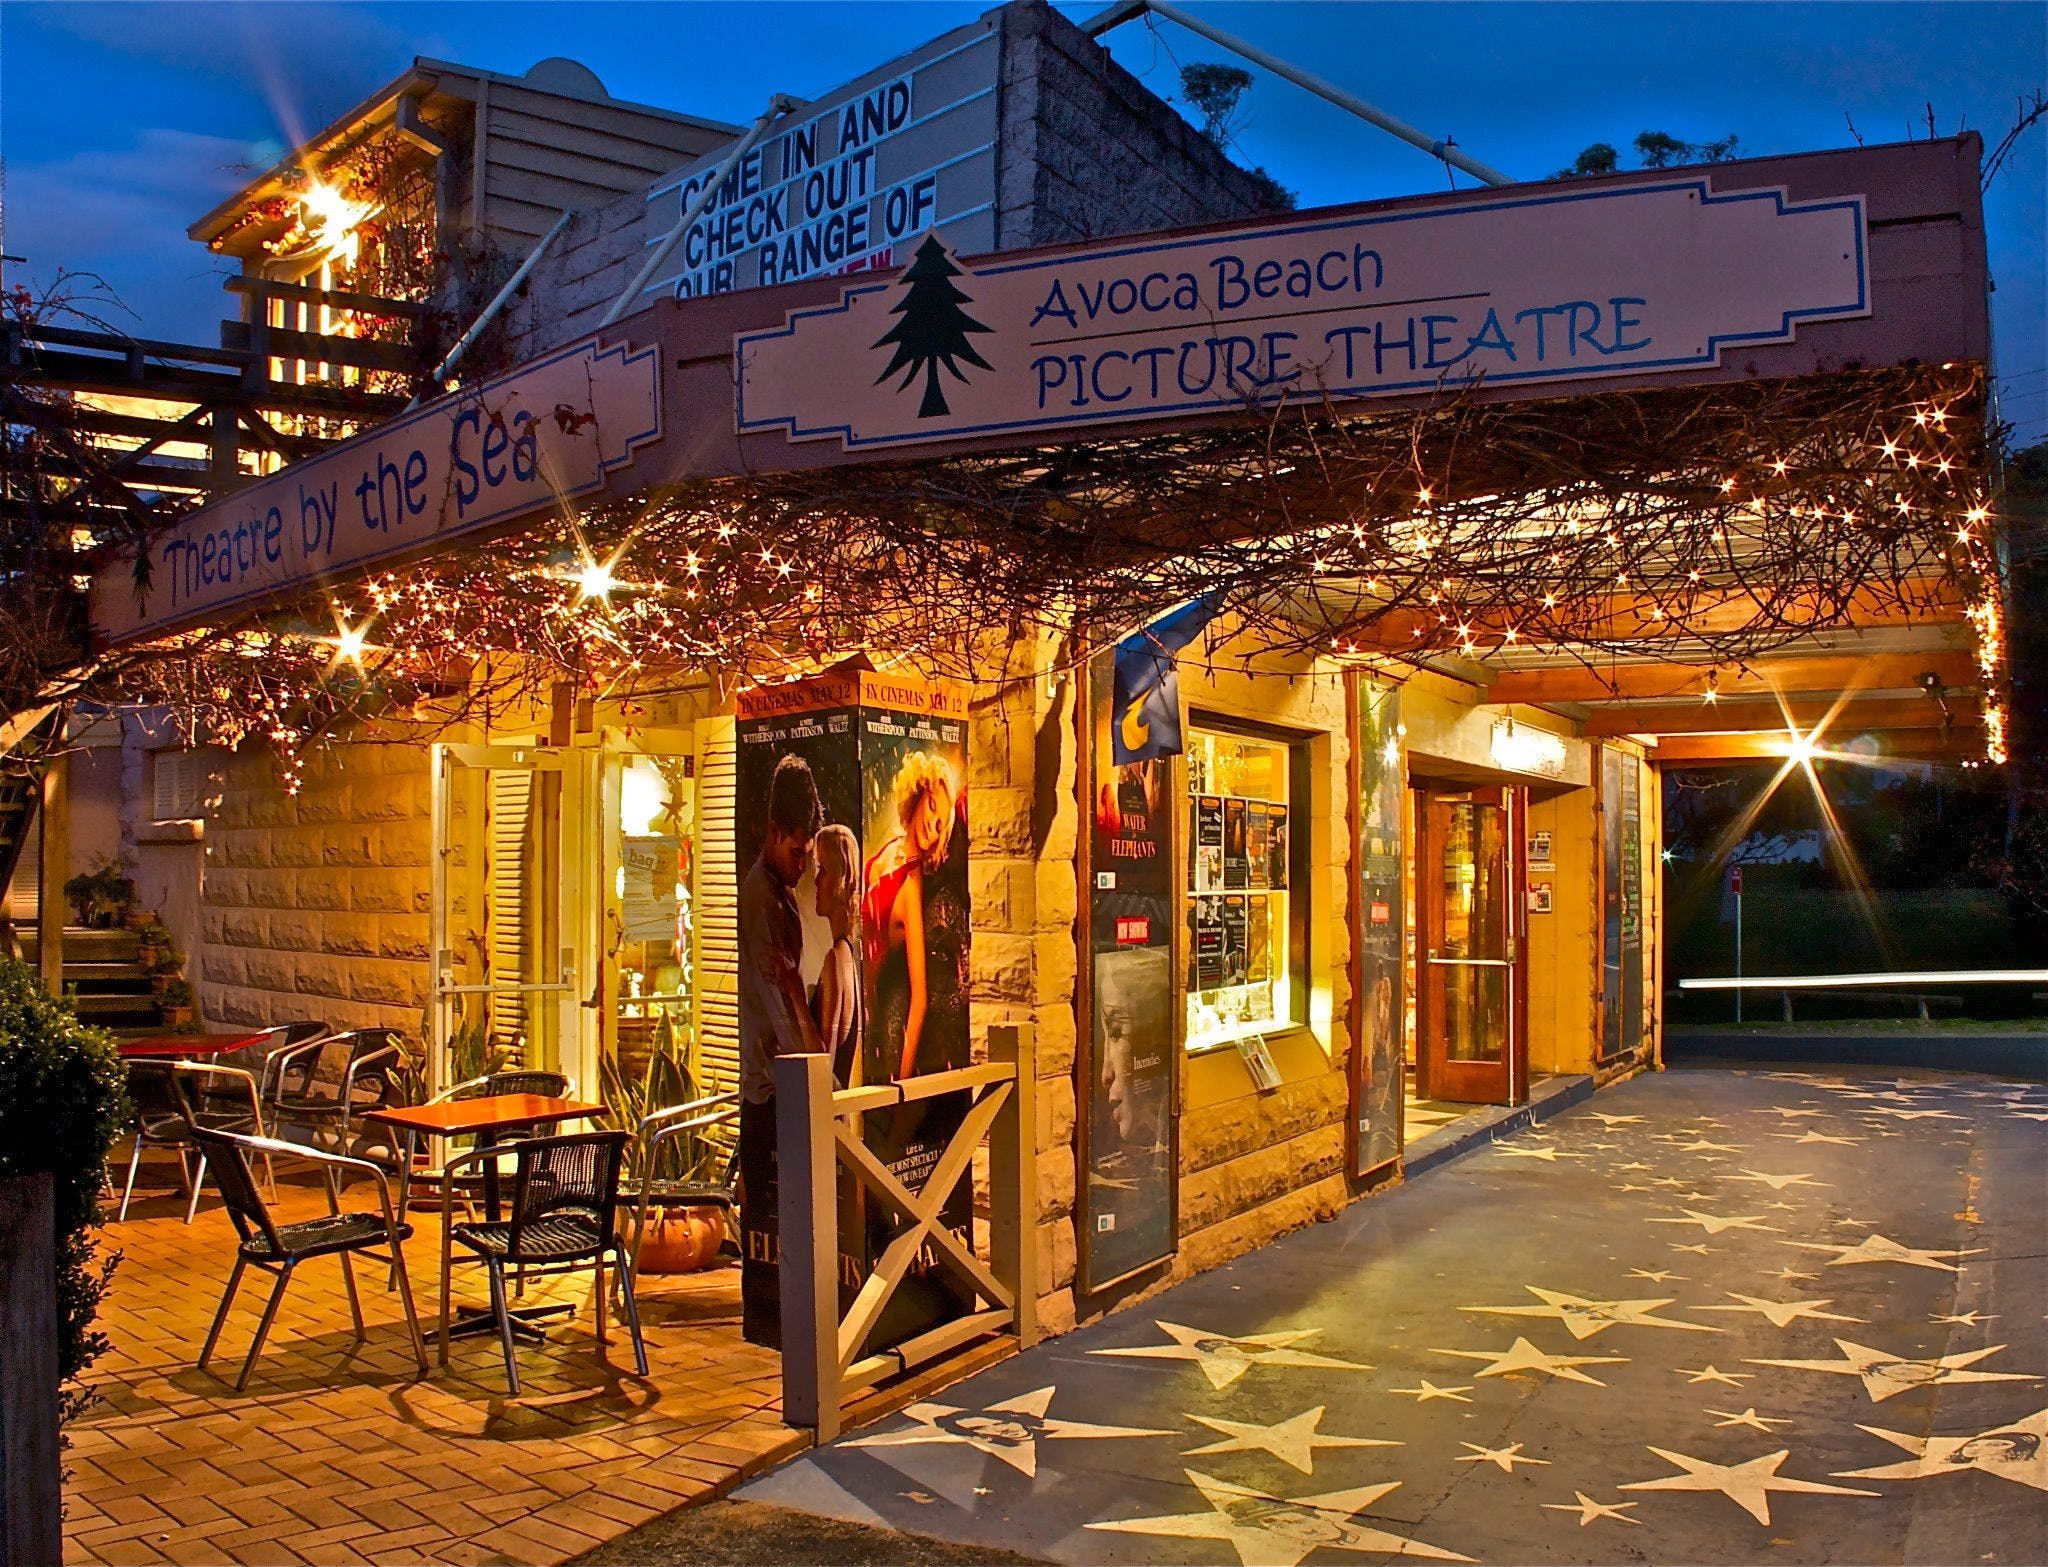 Avoca Beach Picture Theatre - Redcliffe Tourism